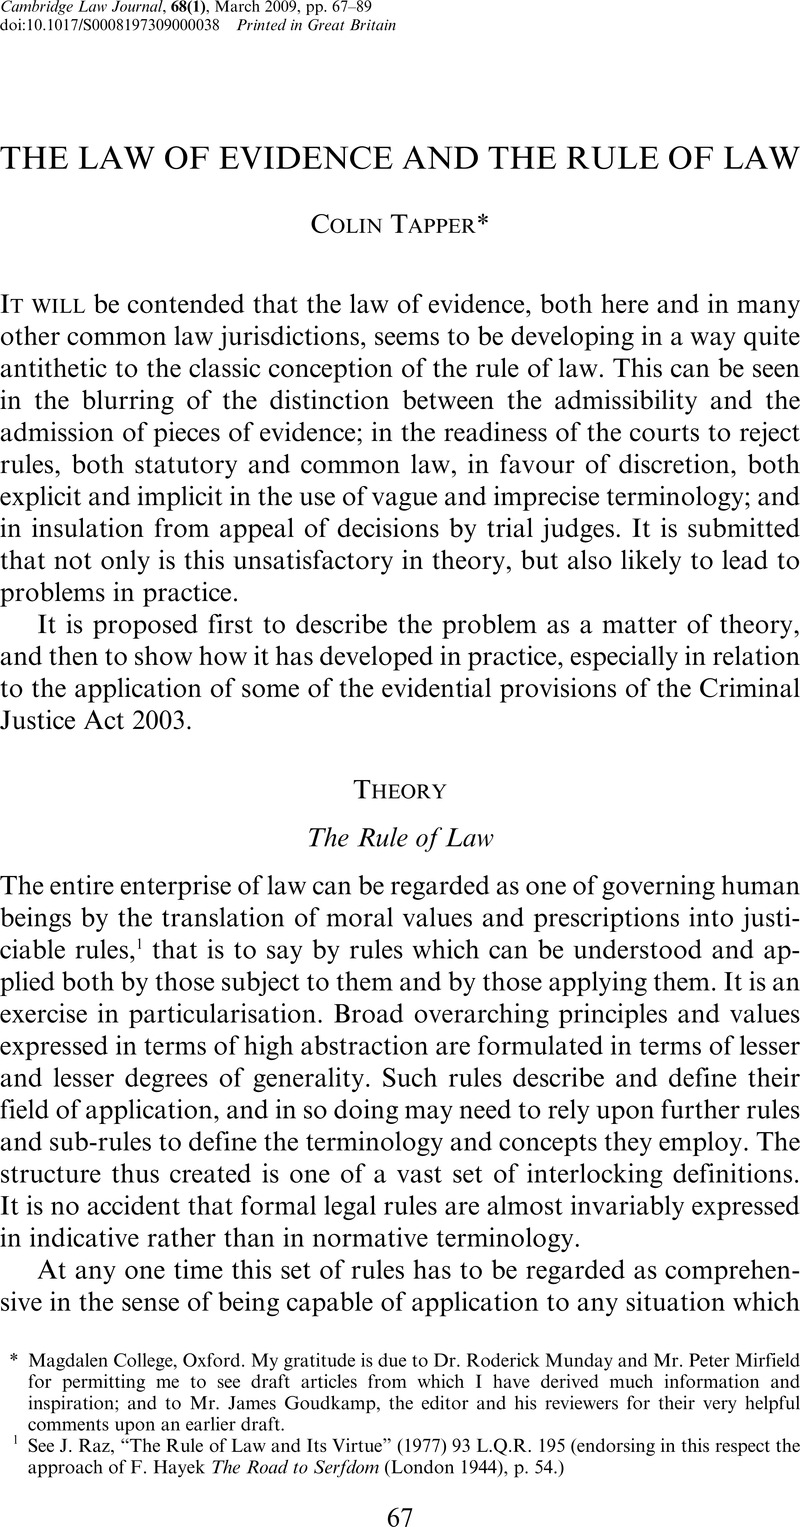 cambridge law phd thesis